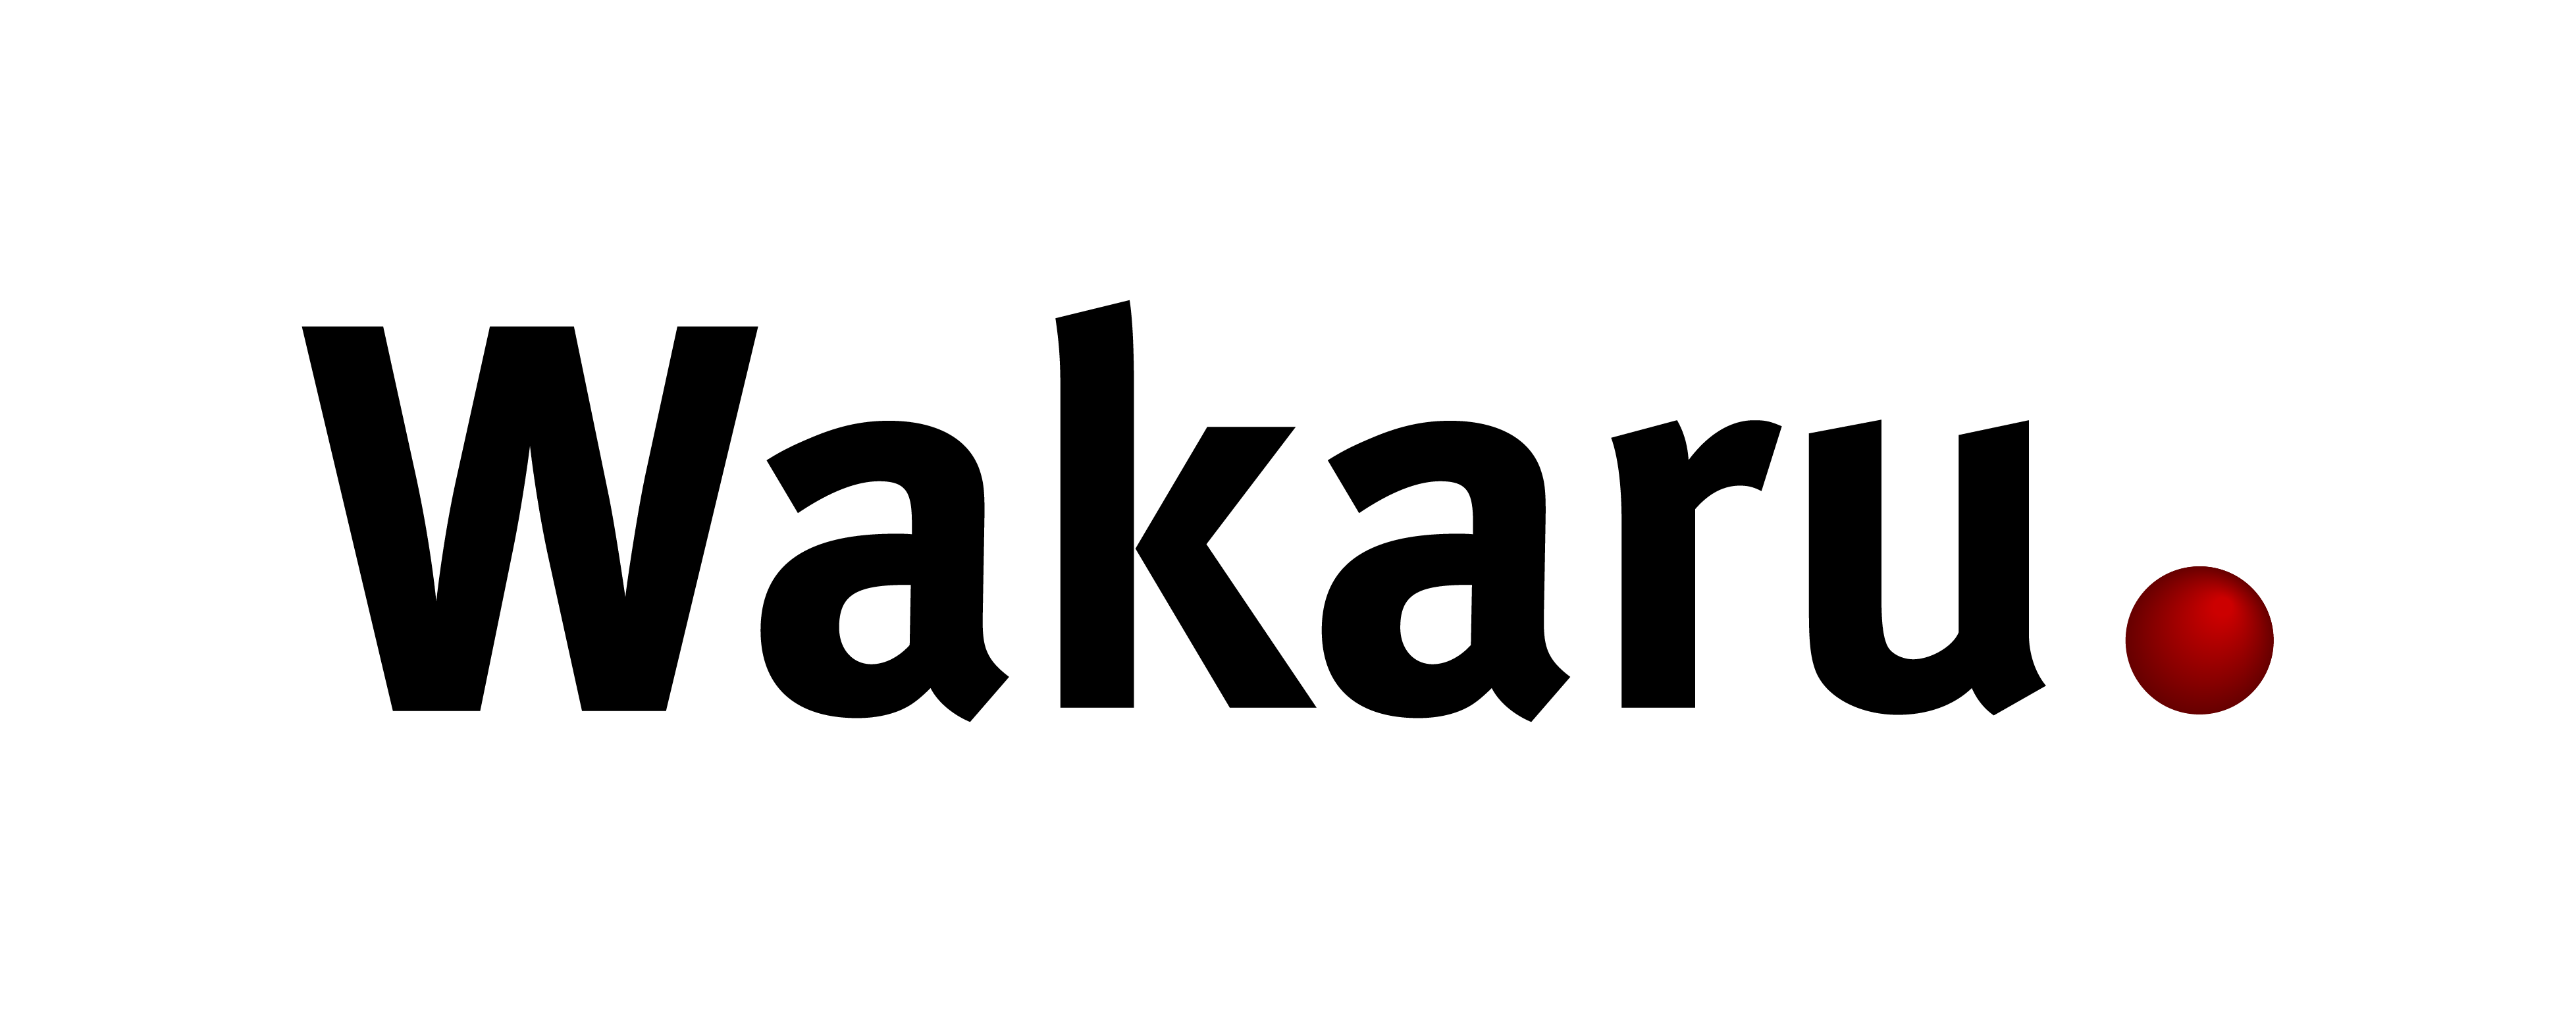 Wakaru logo